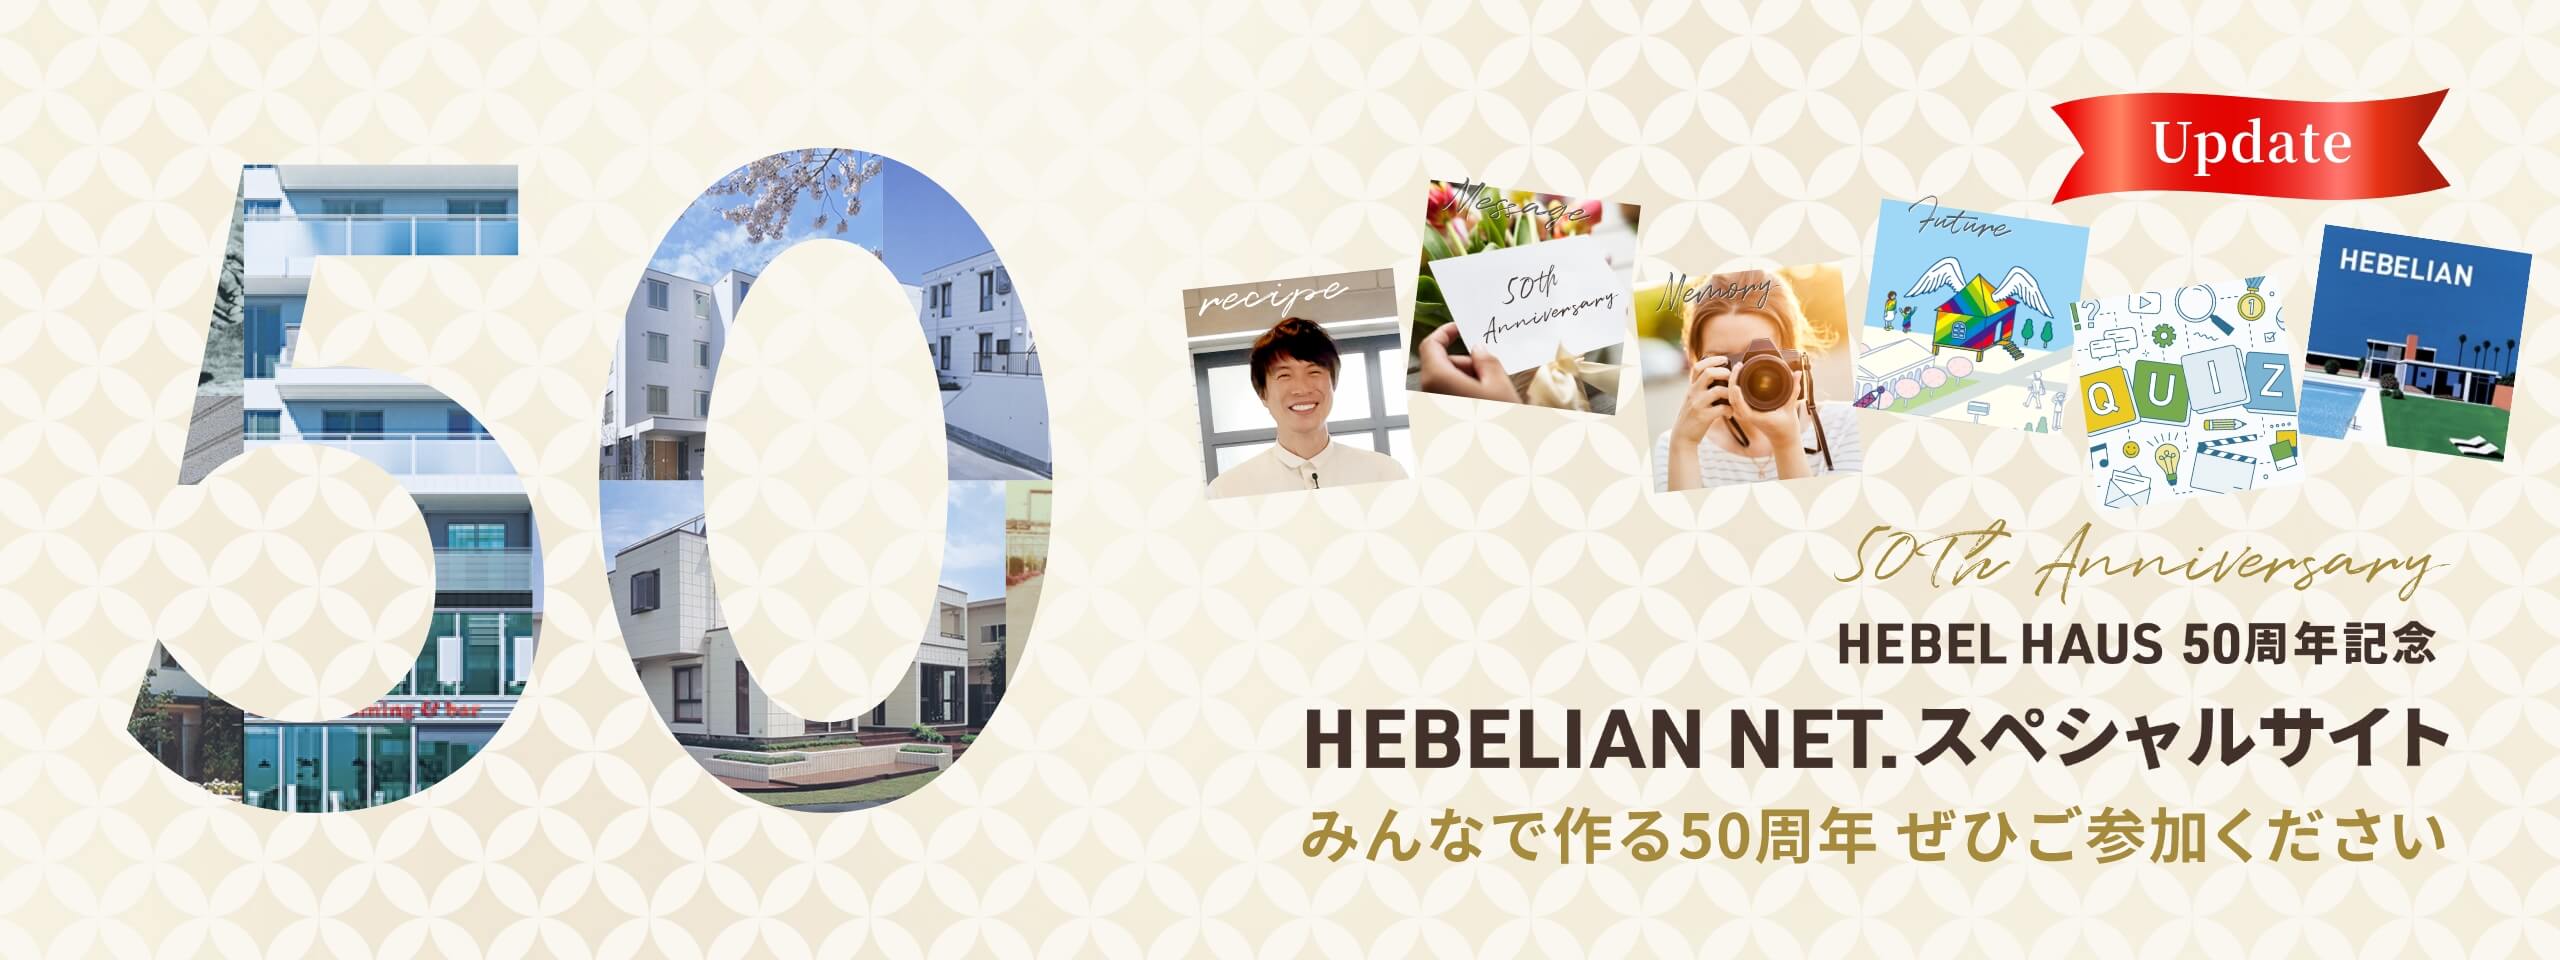 HEBEL HAUS 50周年記念 HEBELIAN NET.スペシャルサイト みんなで作る50周年 ぜひご参加ください